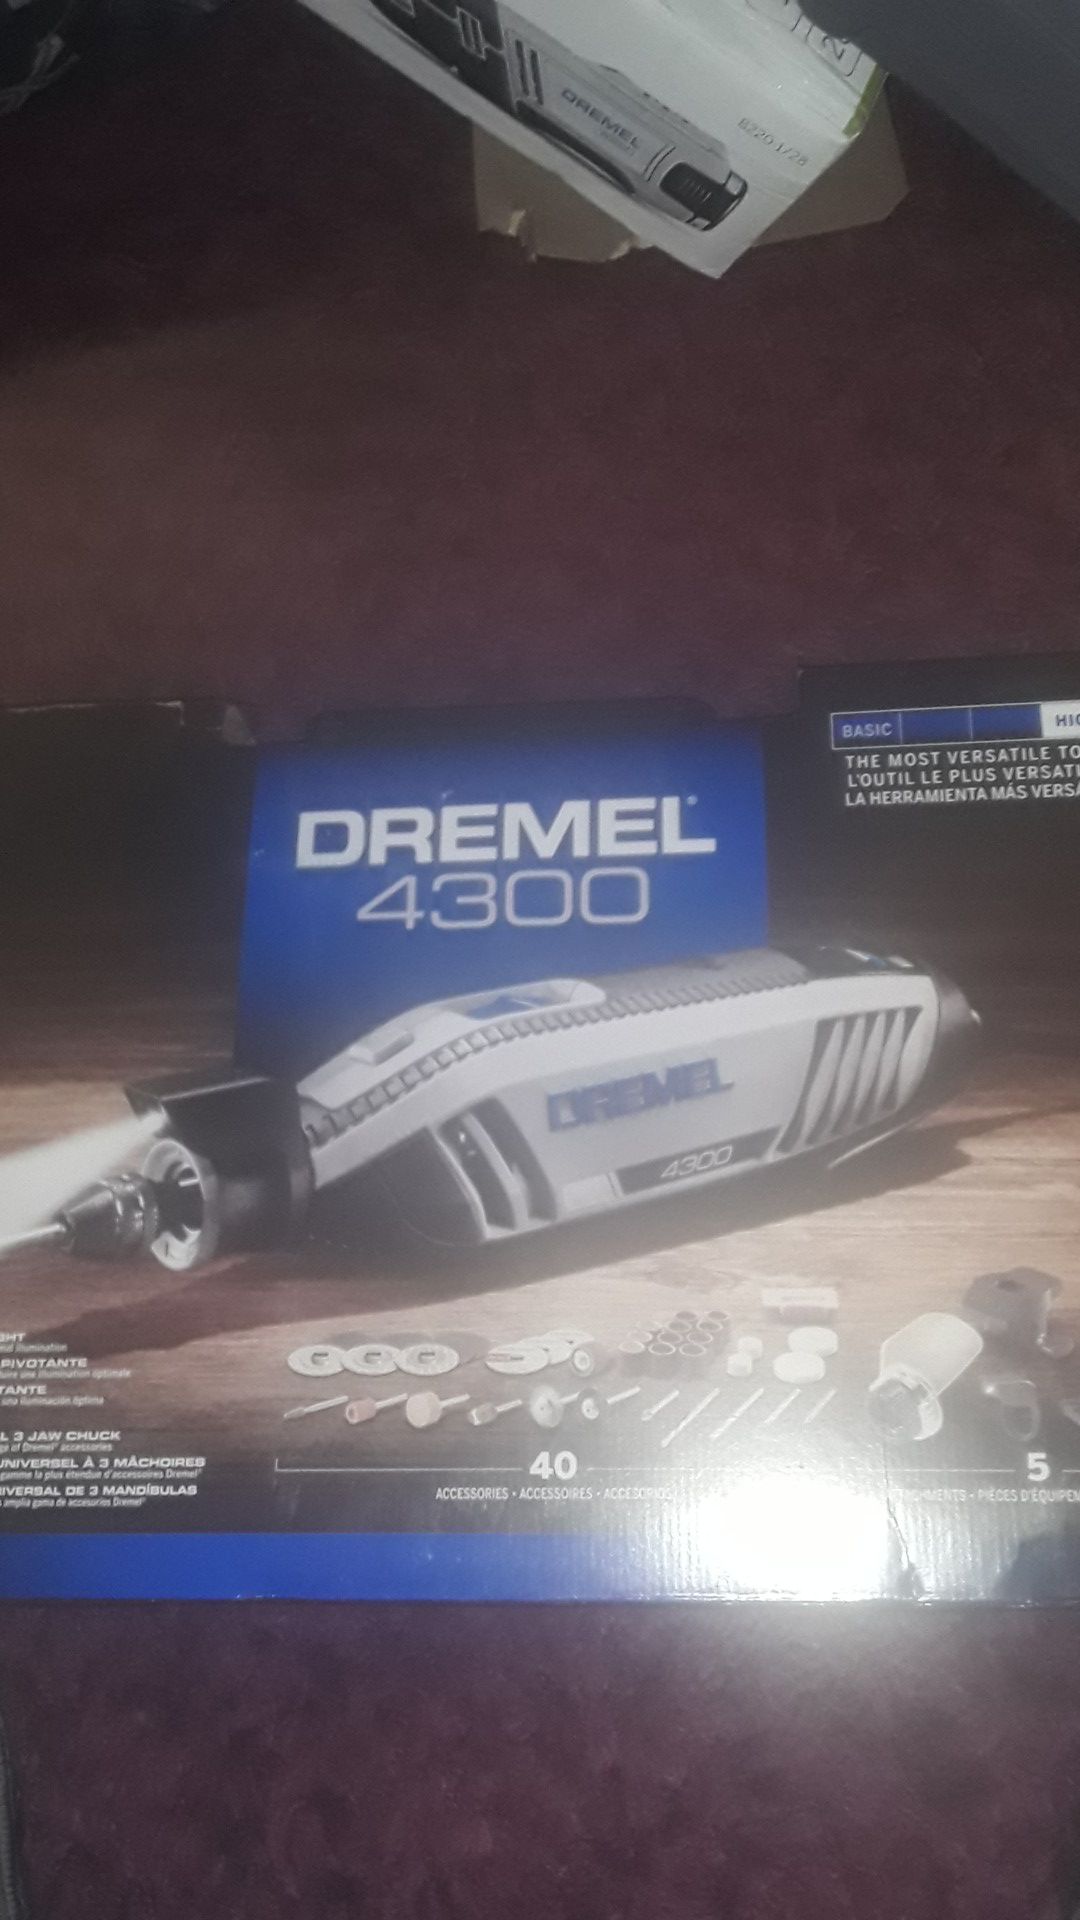 Dremel 4300 has power cord